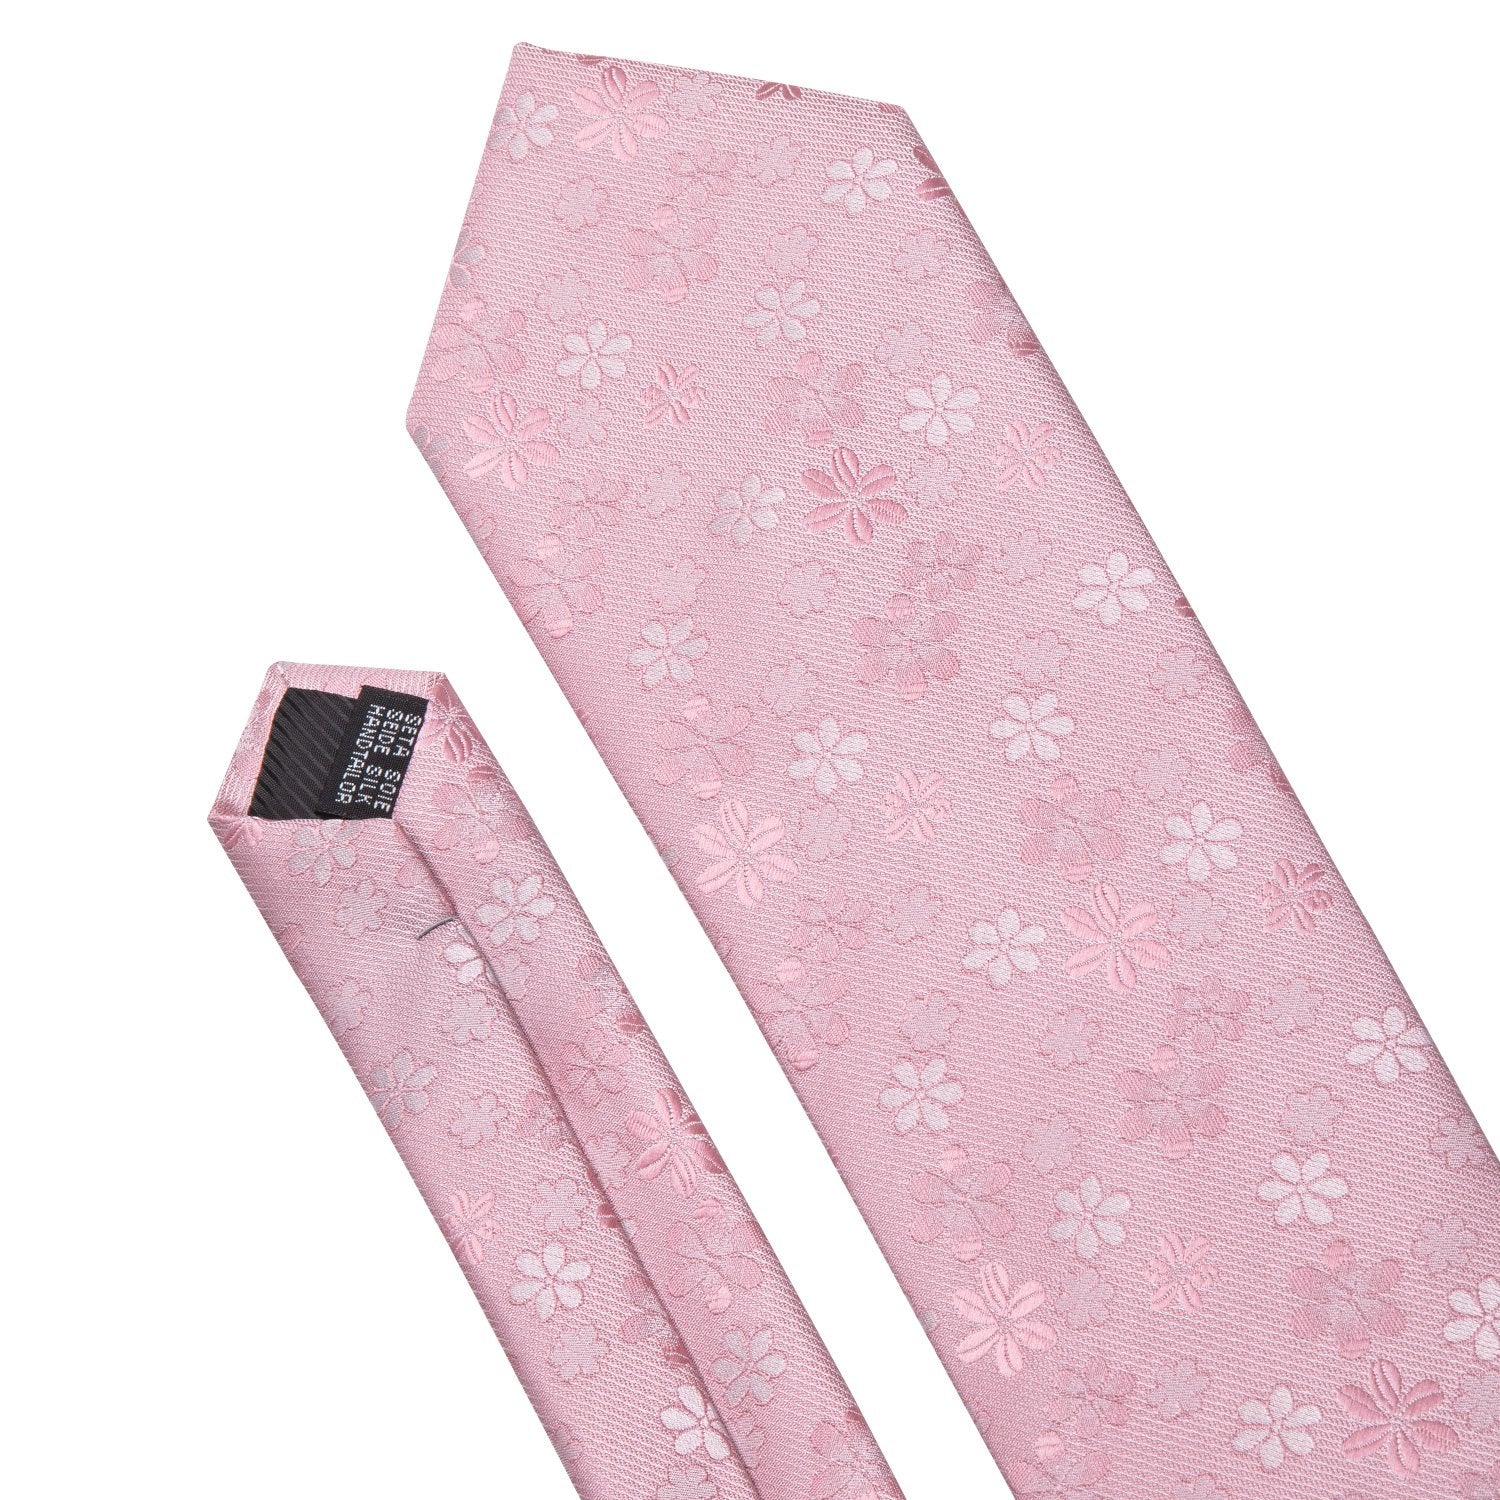 Pink Floral Silk Fabric Tie Hanky Cufflinks Set - barry-wang